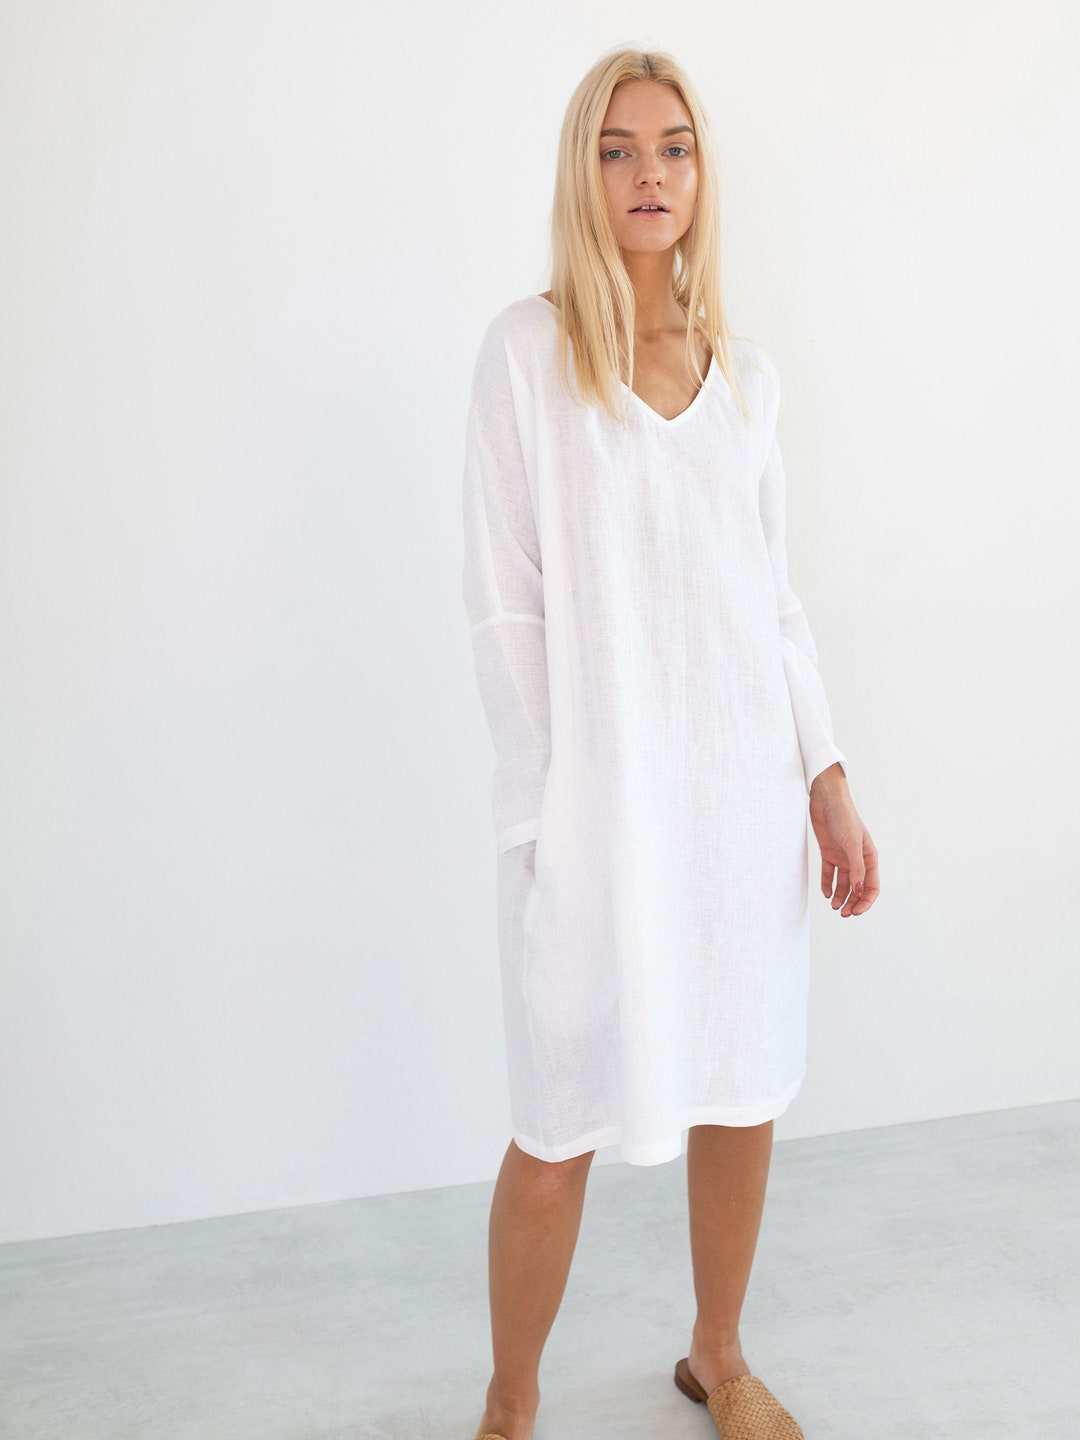 FRIDA White Linen Dress / Long Sleeve Dress With Belt - Etsy